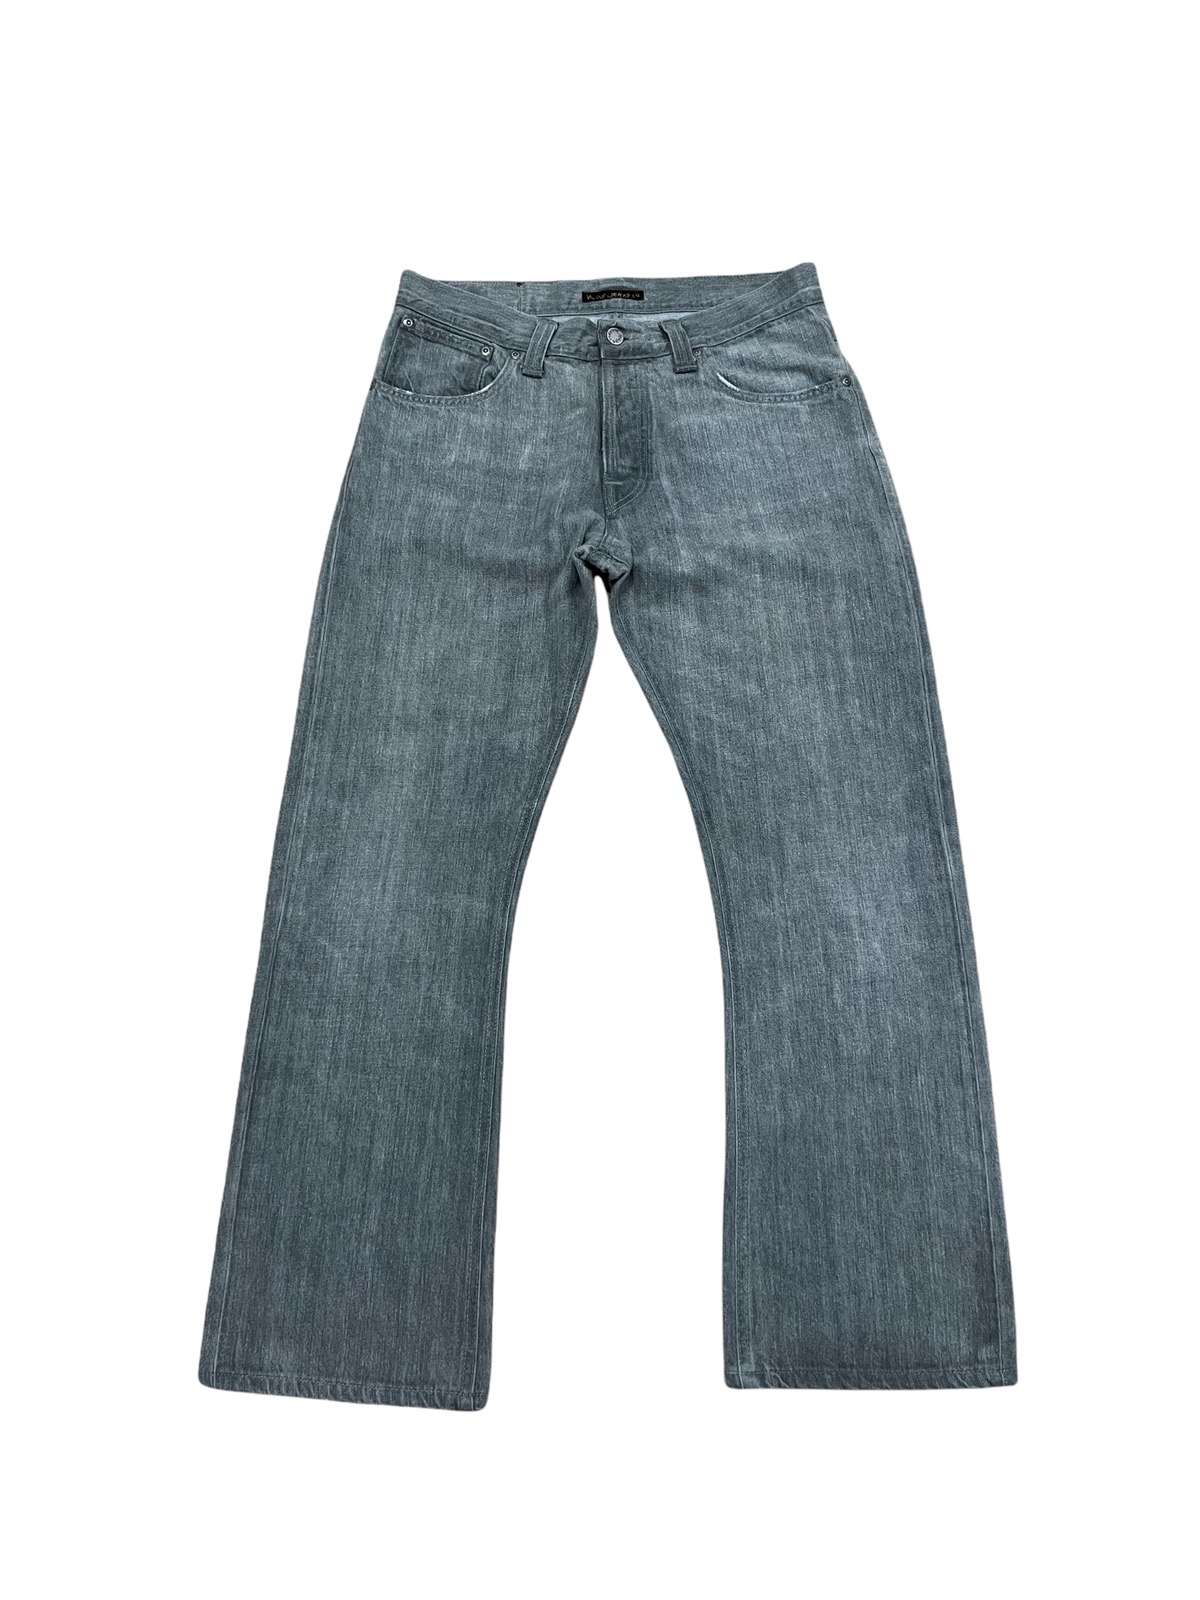 Nudie Regular Alf Used Grey Made In Italy Jeans - 2